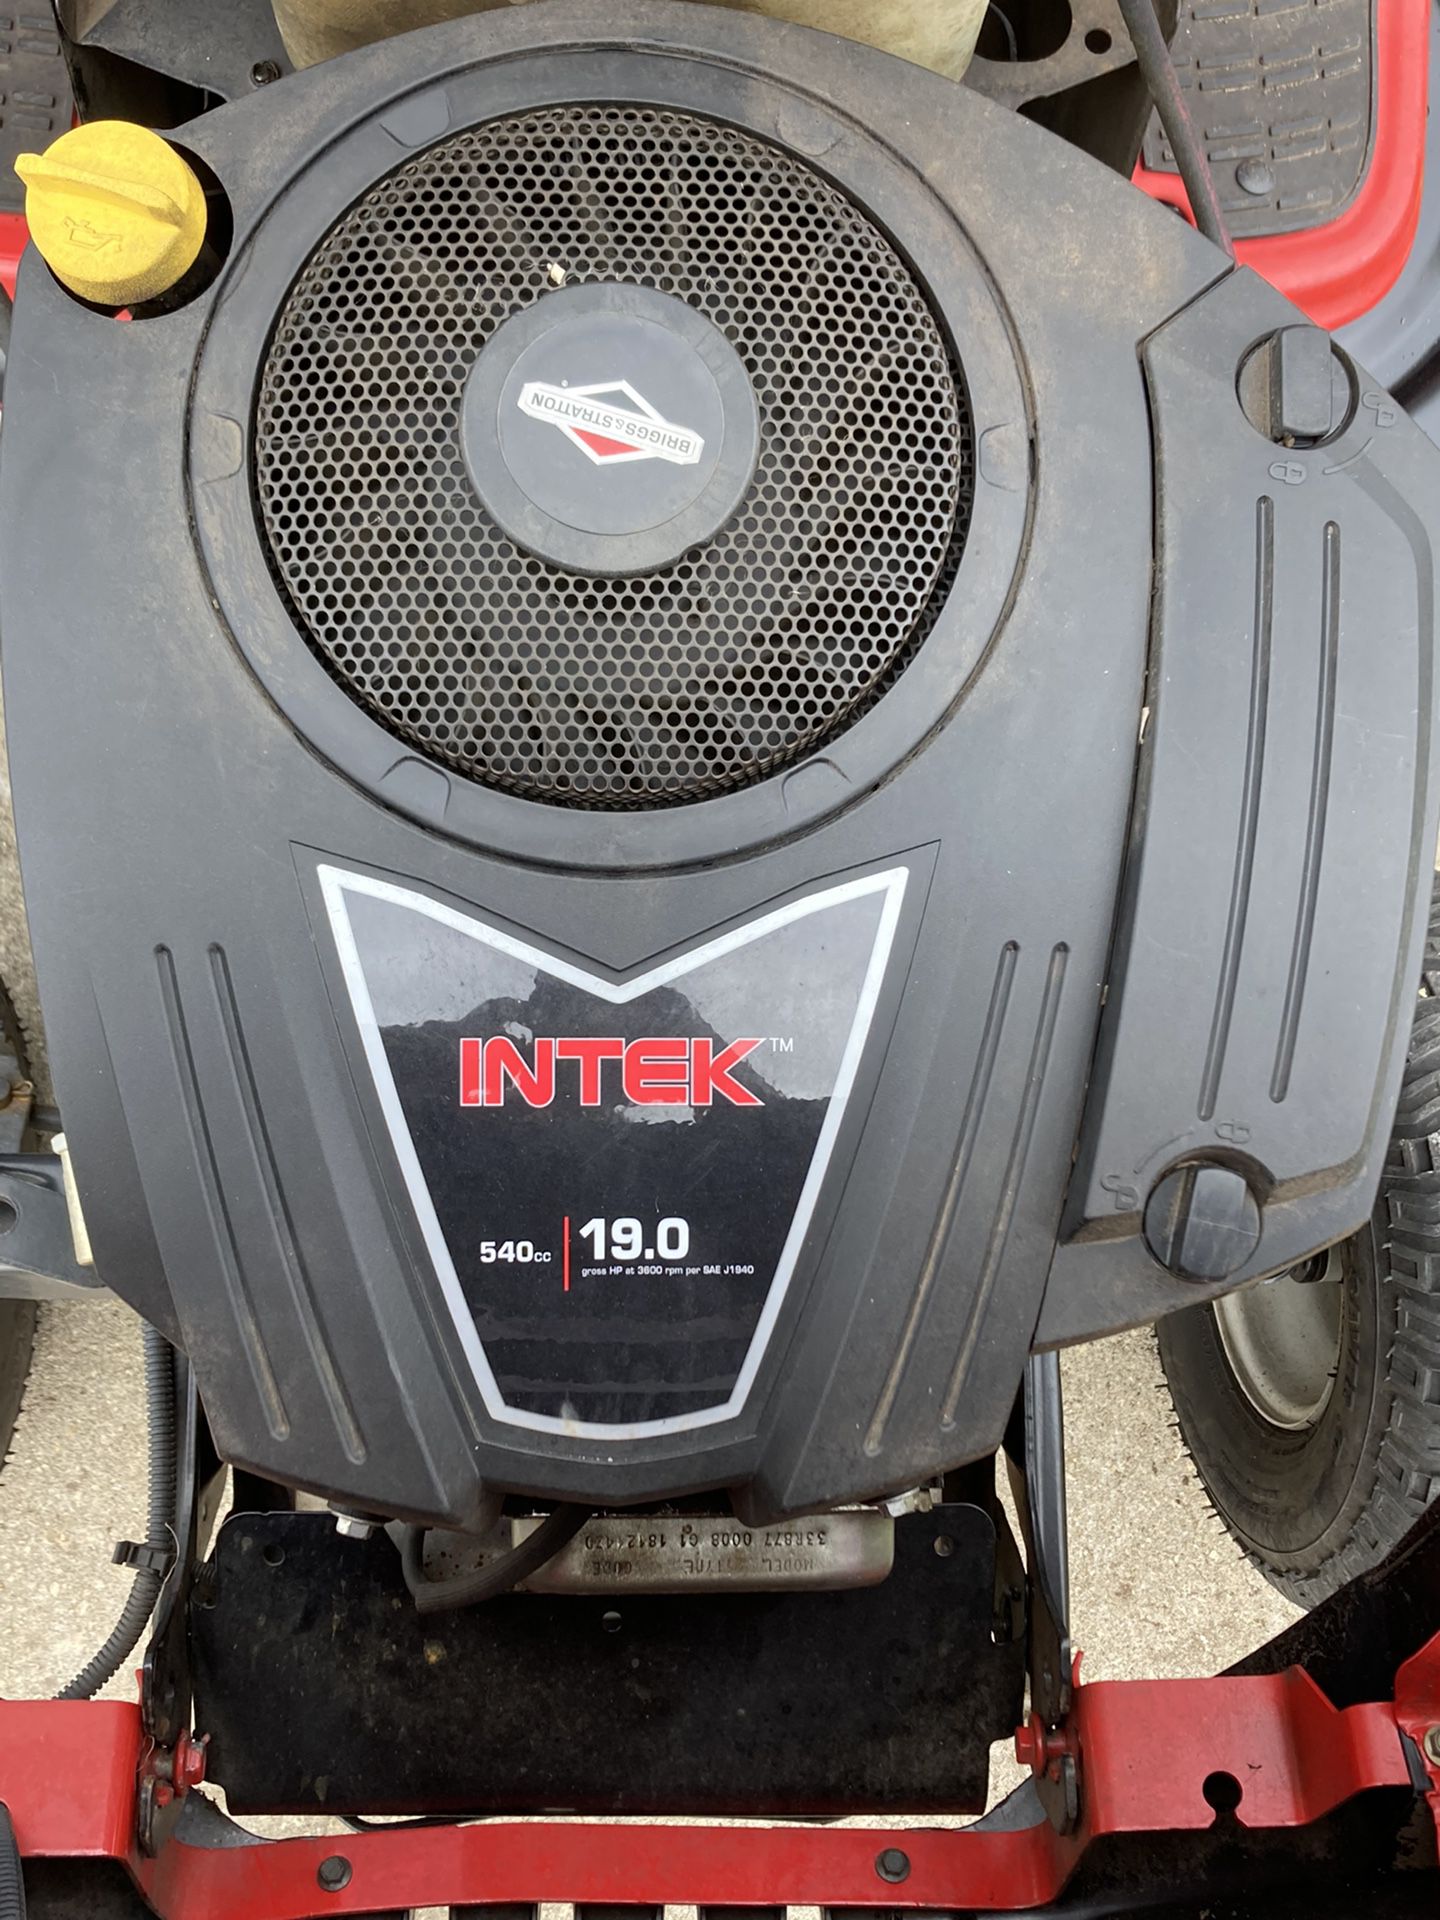 2019 Garage Kept Troybilt Bronco Tractor 42 Inch Riding Lawn Mower